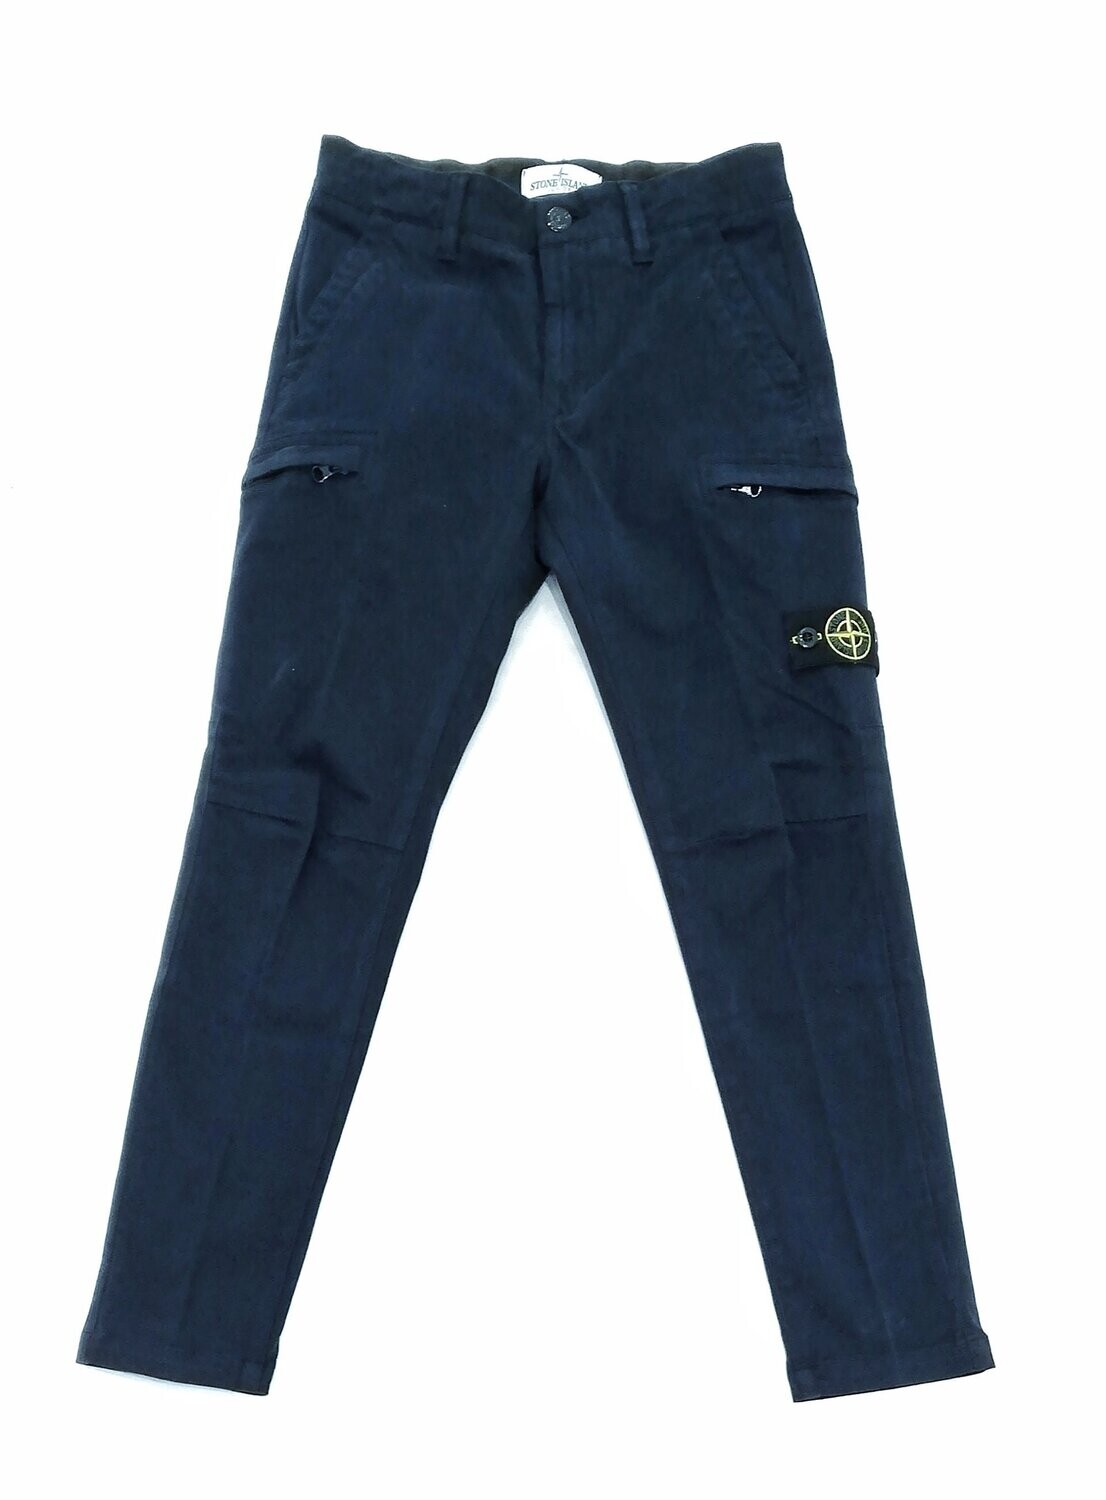 Stone Island - Pantalone blu doppia tasca, size: 8 anni